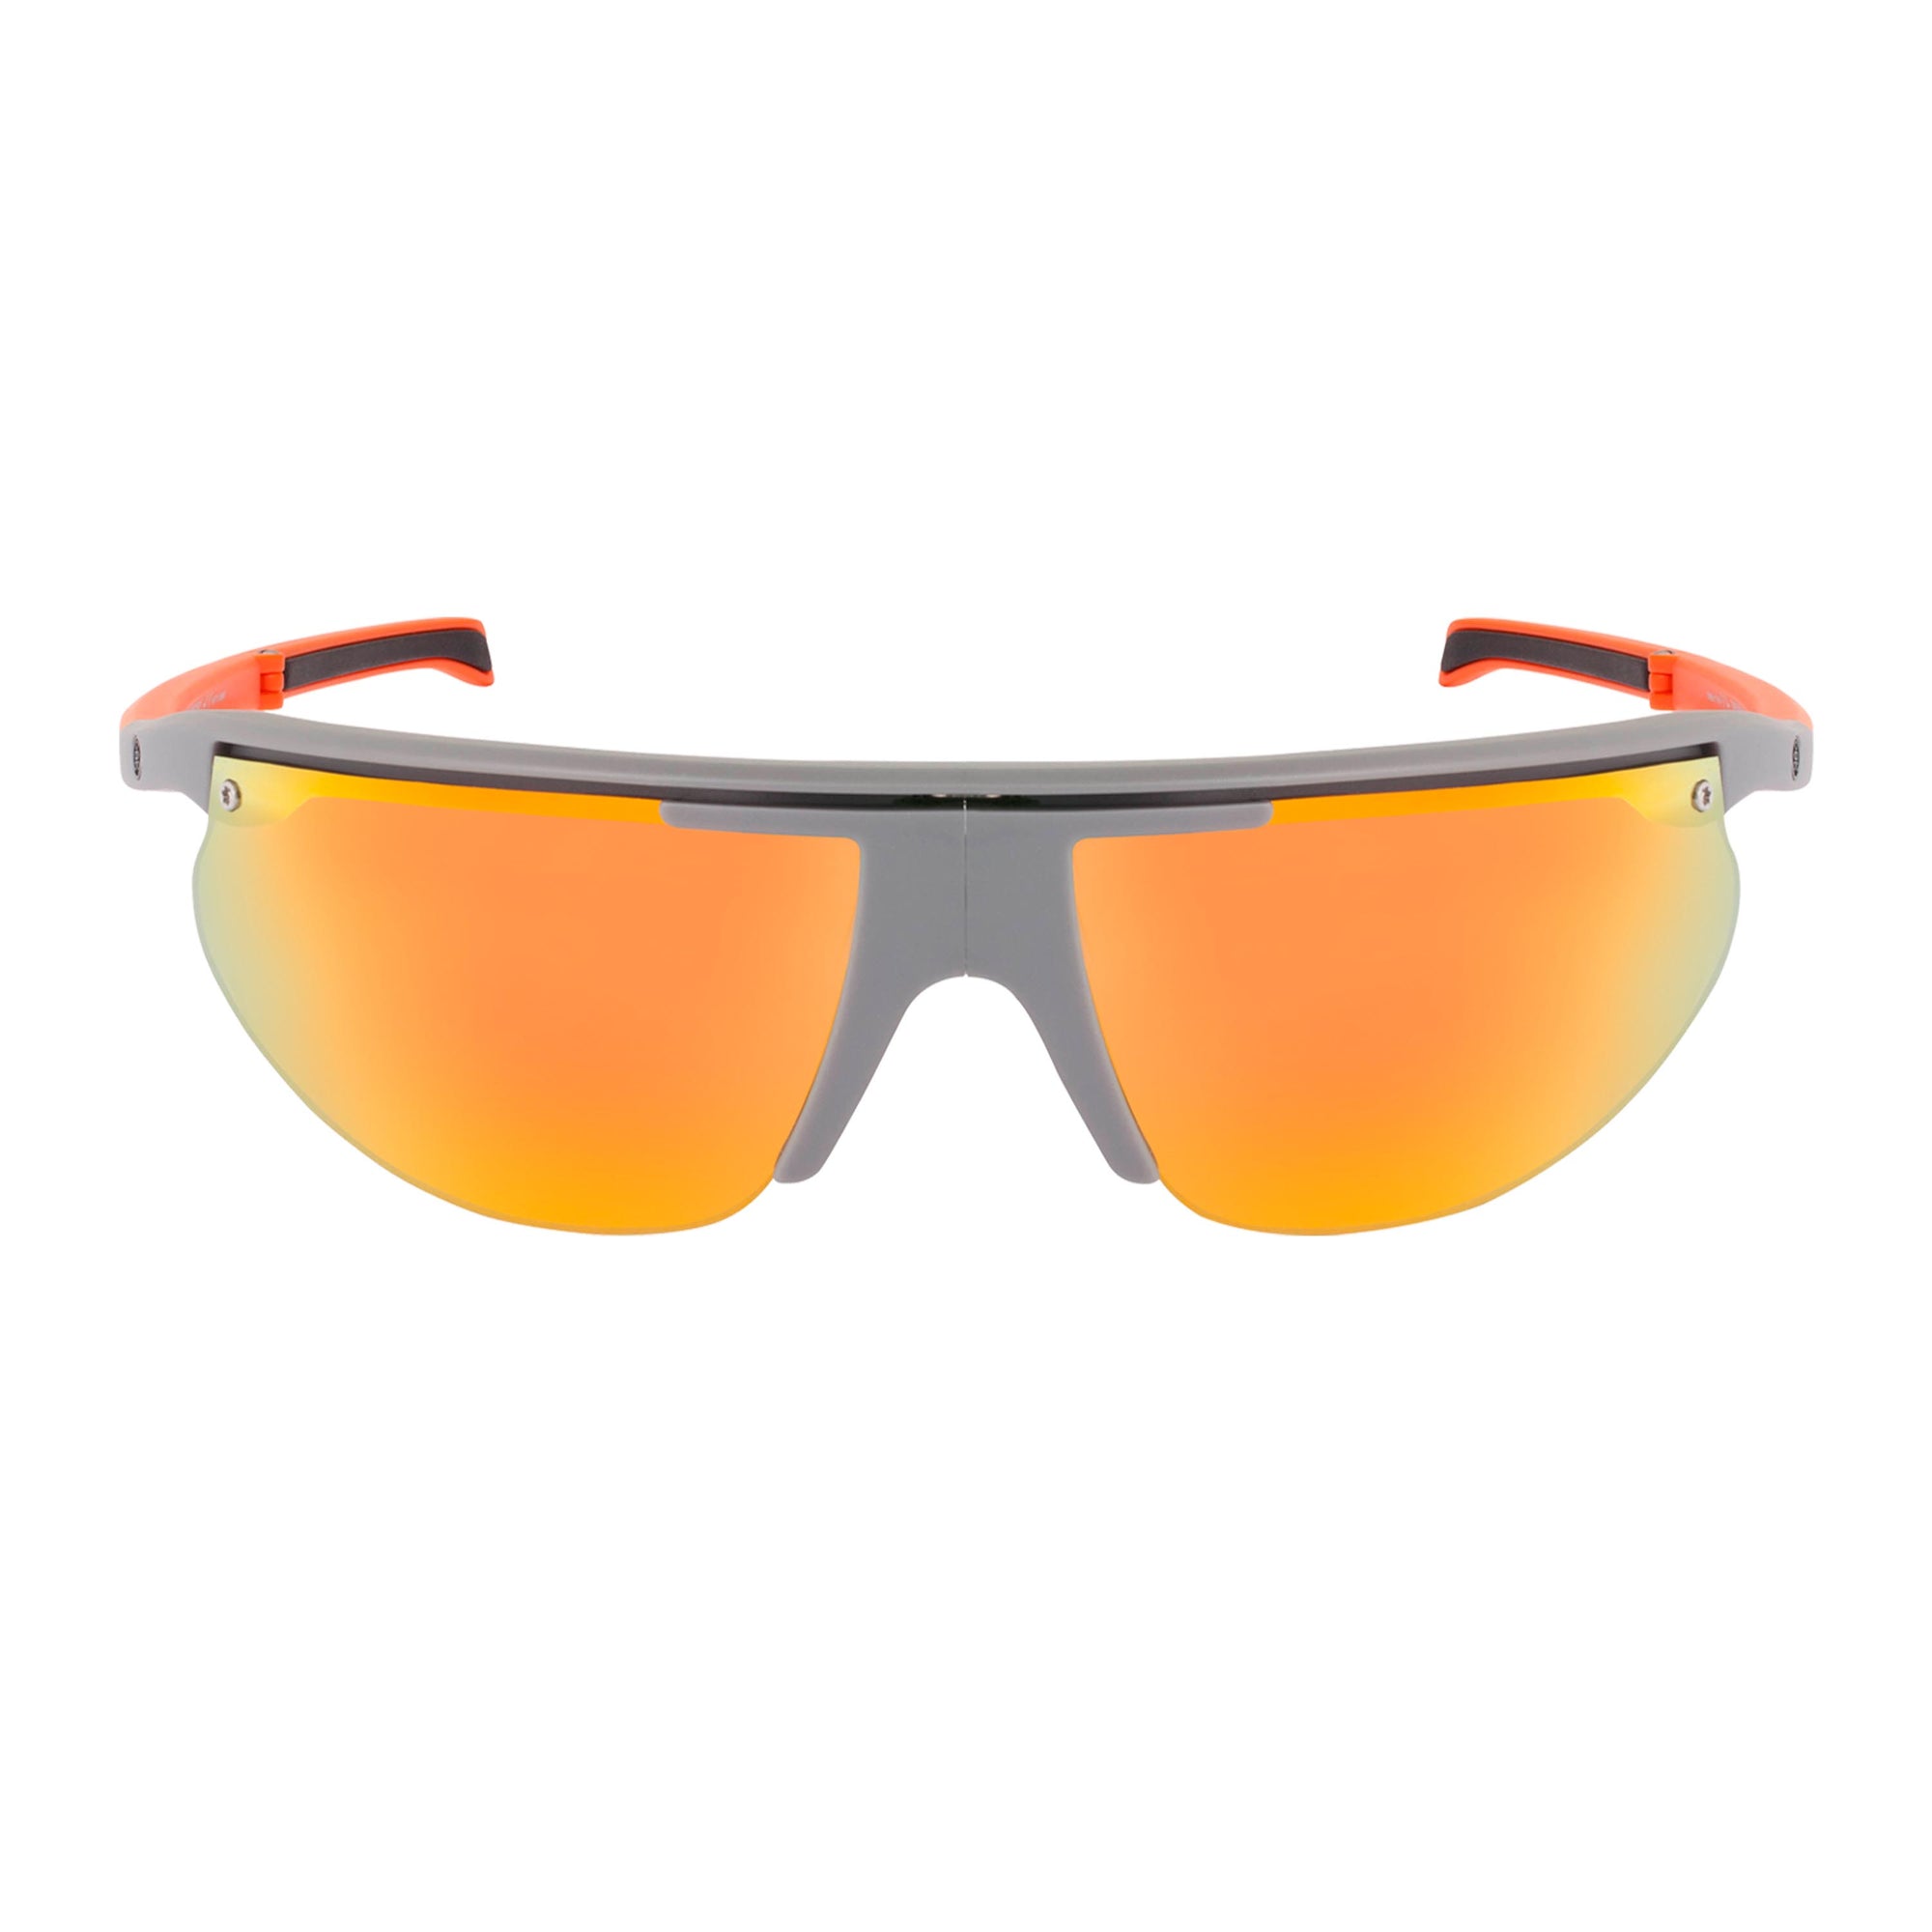 Popticals, Premium Compact Sunglasses, PopTrail, 010081-OMON, Polarized Sunglasses, Matte Gray/Orange Frame, Gray Lenses w/Orange Mirror Finish, Front View